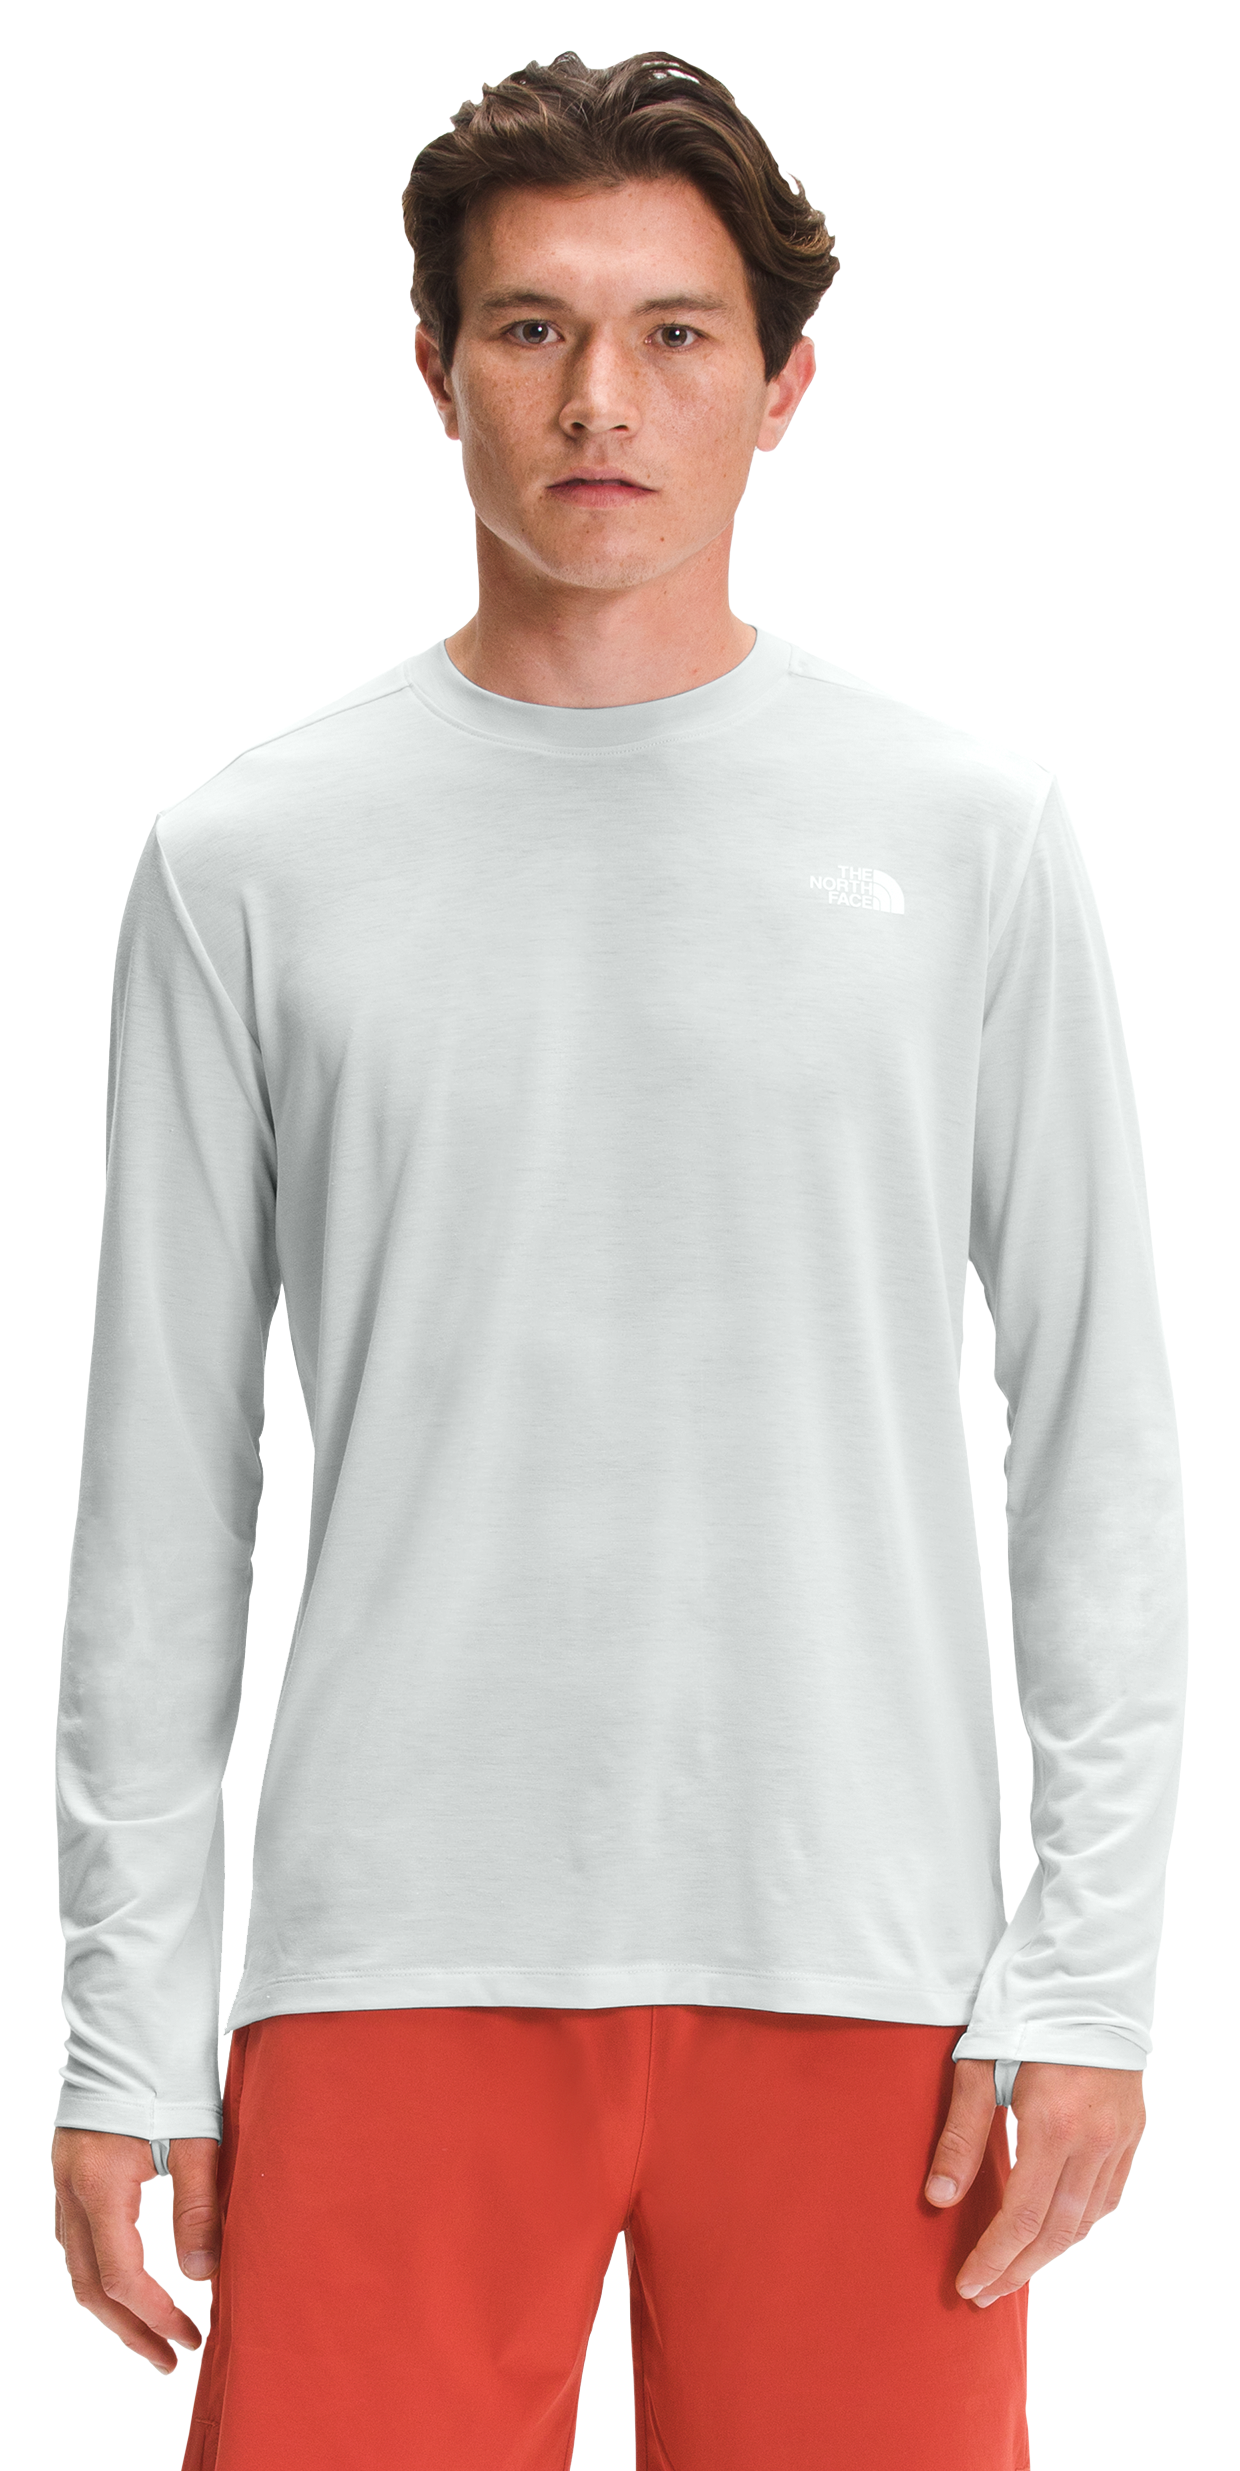 The North Face Wander Long-Sleeve Shirt for Men - Tin Grey - L